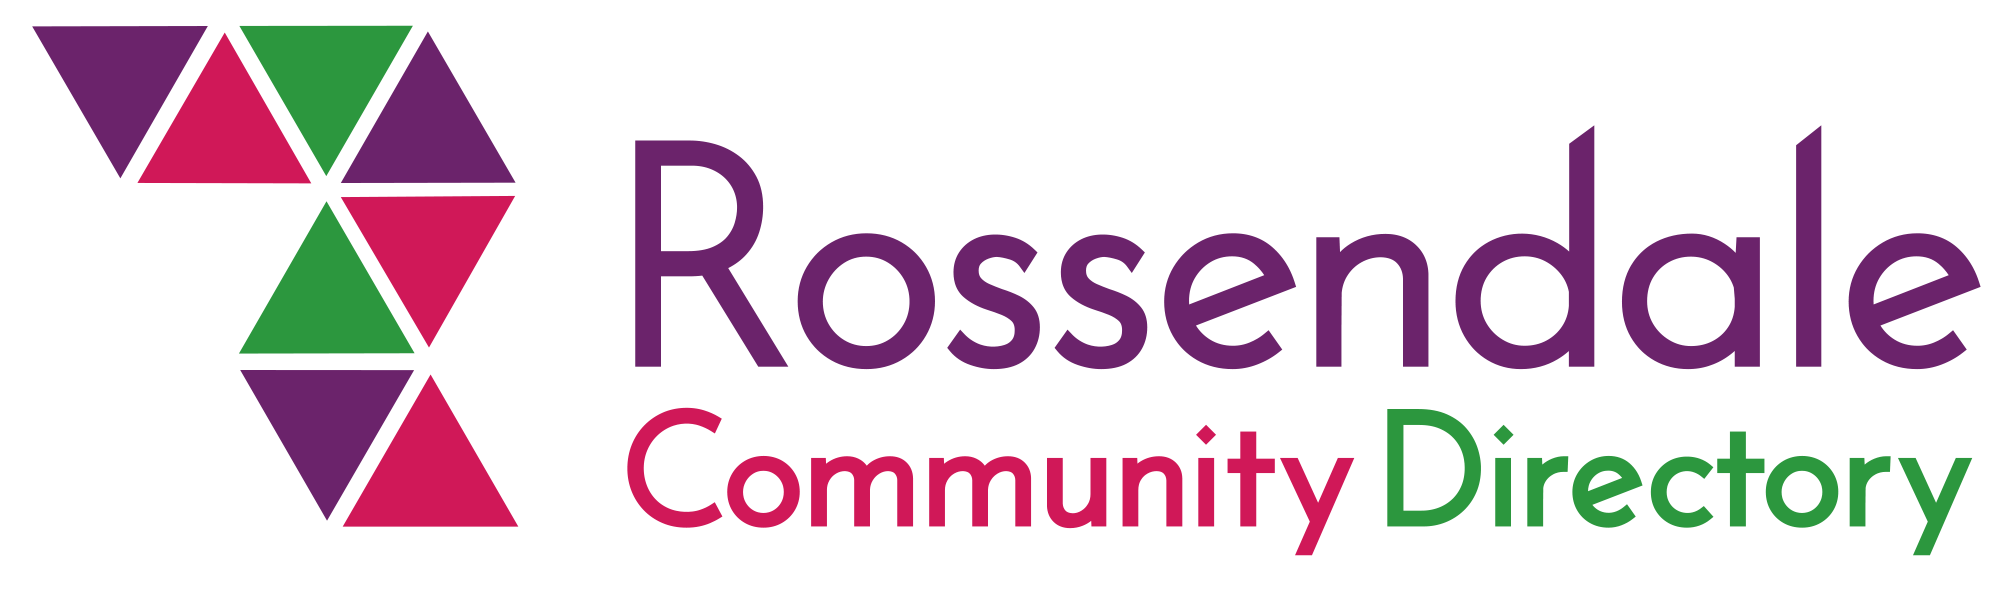 Rossendale Community Directory Logo